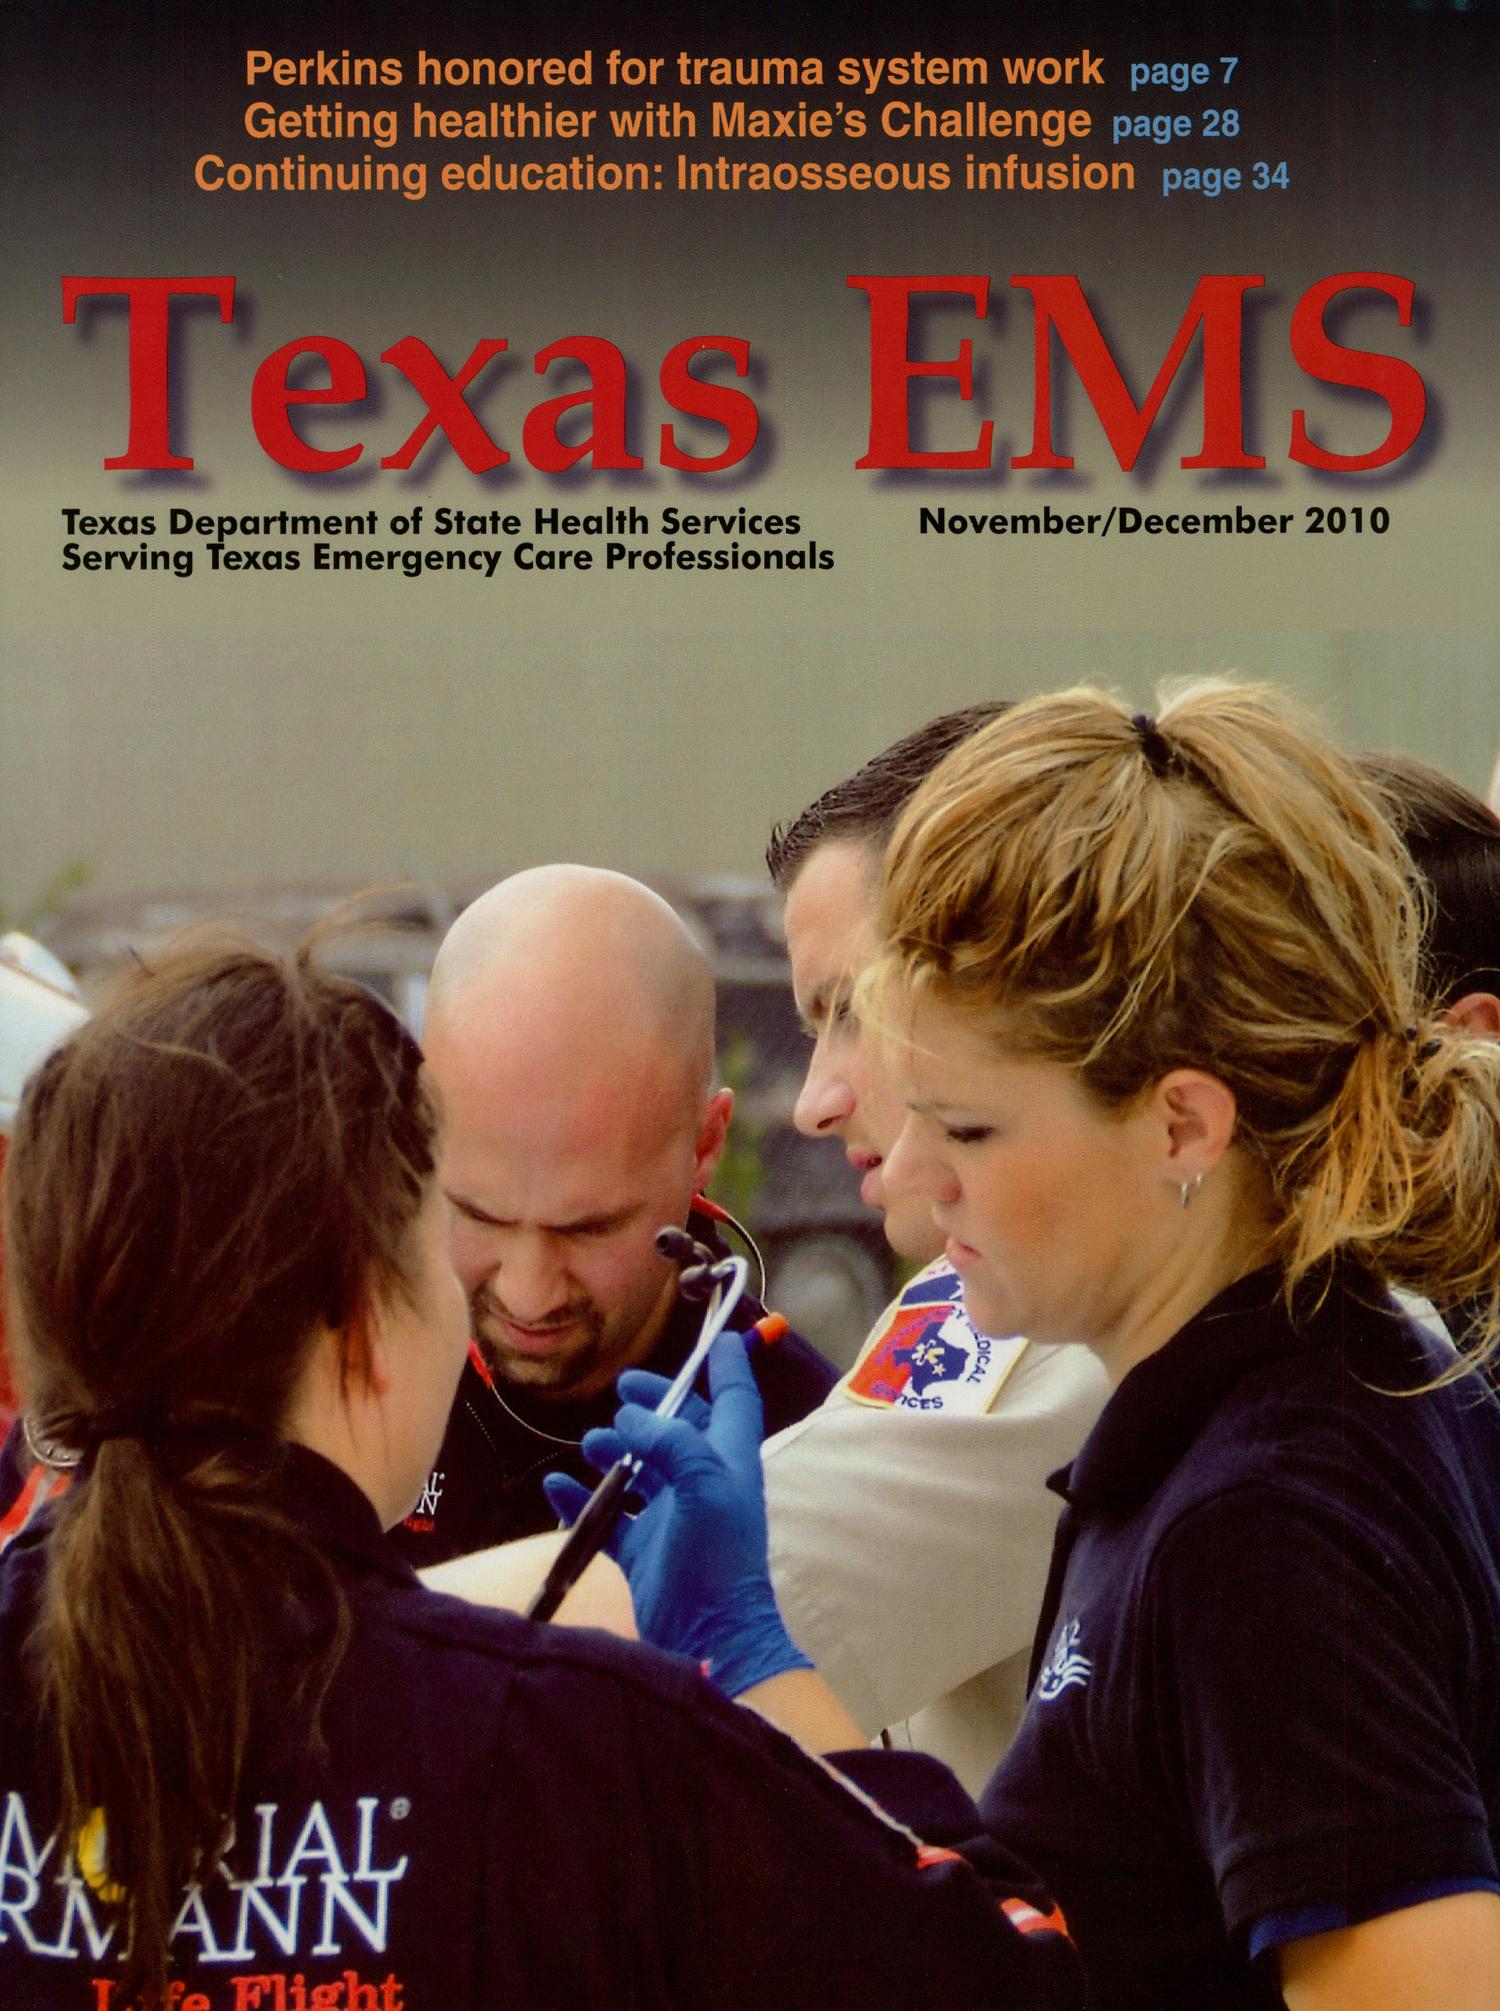 Texas EMS Magazine, Volume 31, Number 6, November/December 2010
                                                
                                                    FRONT COVER
                                                